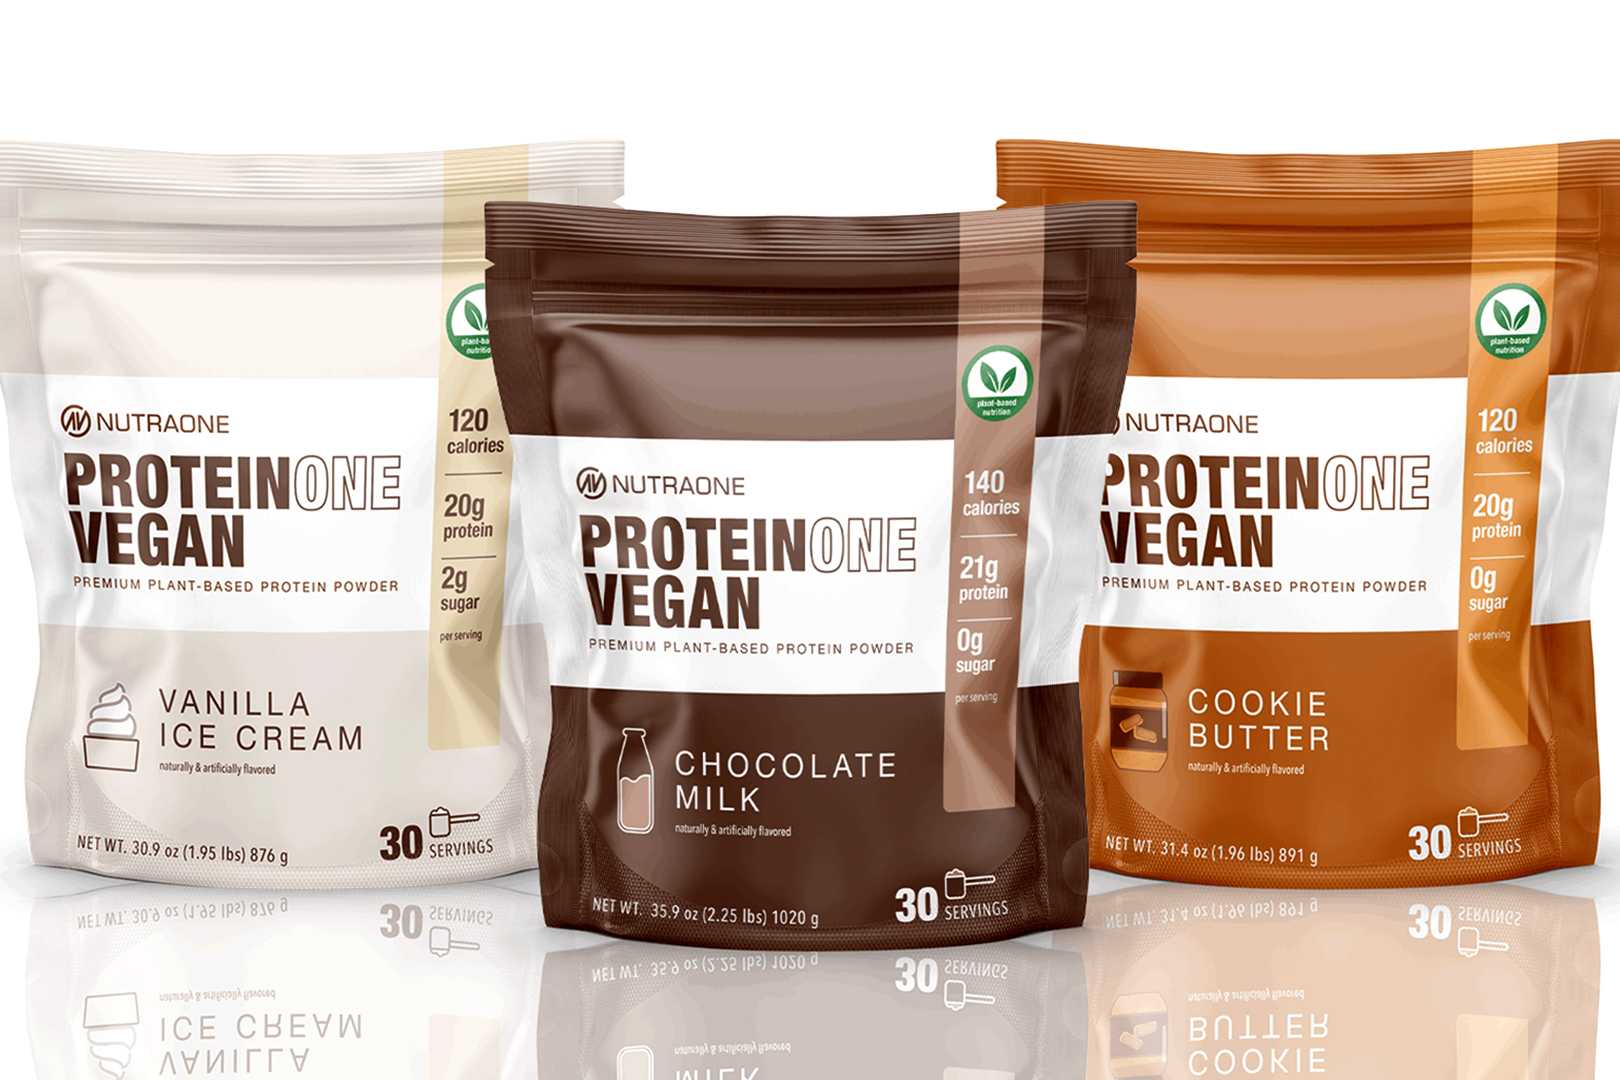 Nutraone Proteinone Vegan